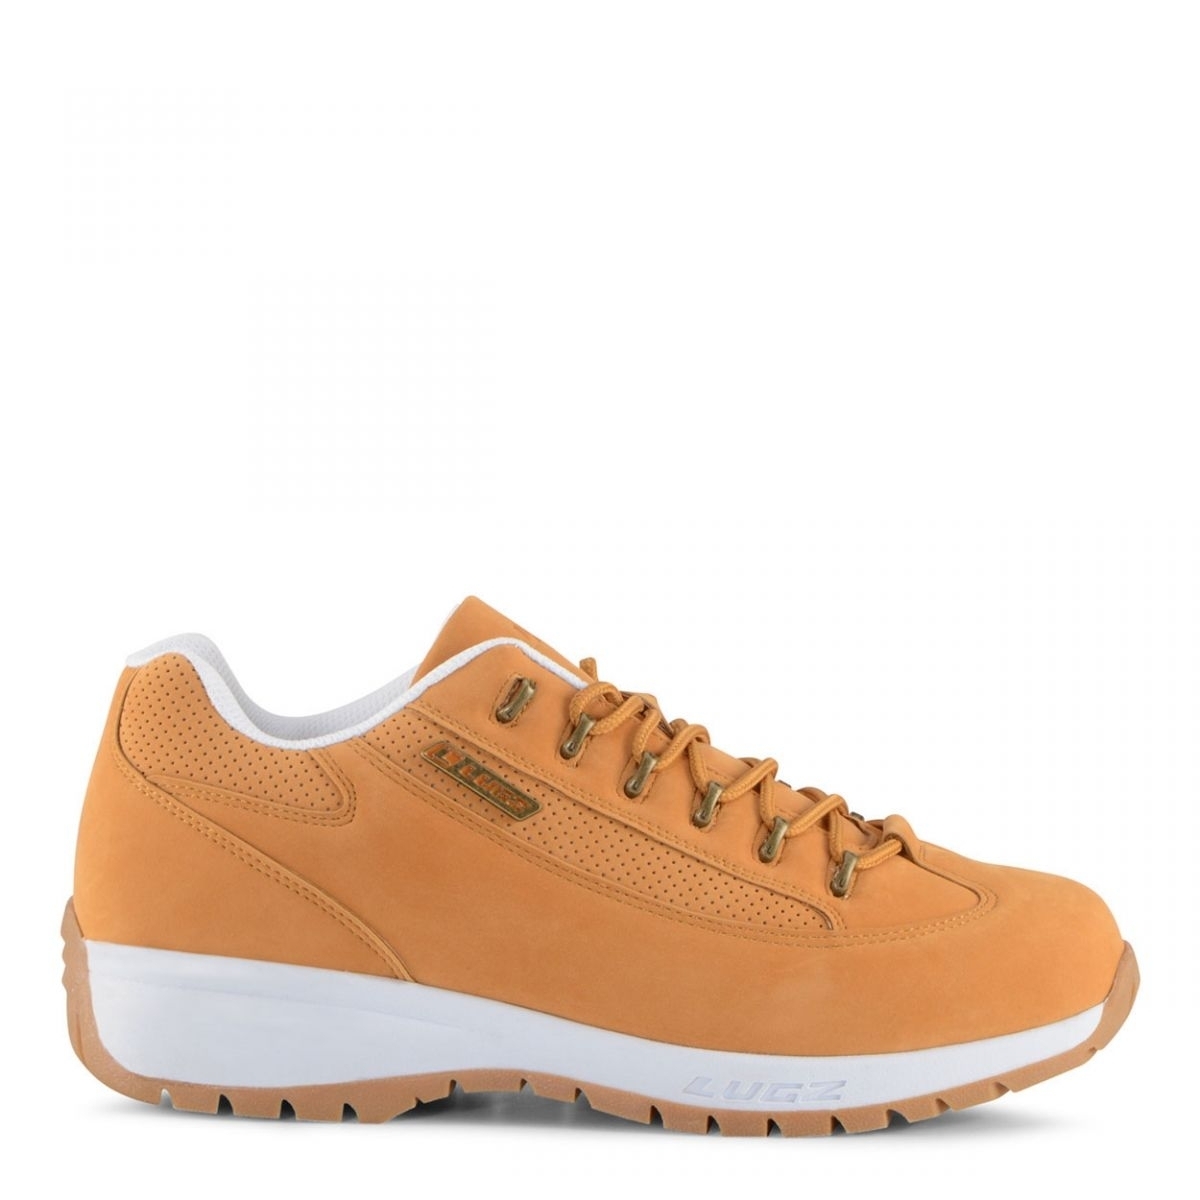 Lugz Men's Express Sneakers Golden Wheat/White - MEXPRSPK-714 Golden Wheat/White/Gum - Golden Wheat/White/Gum, 9.5